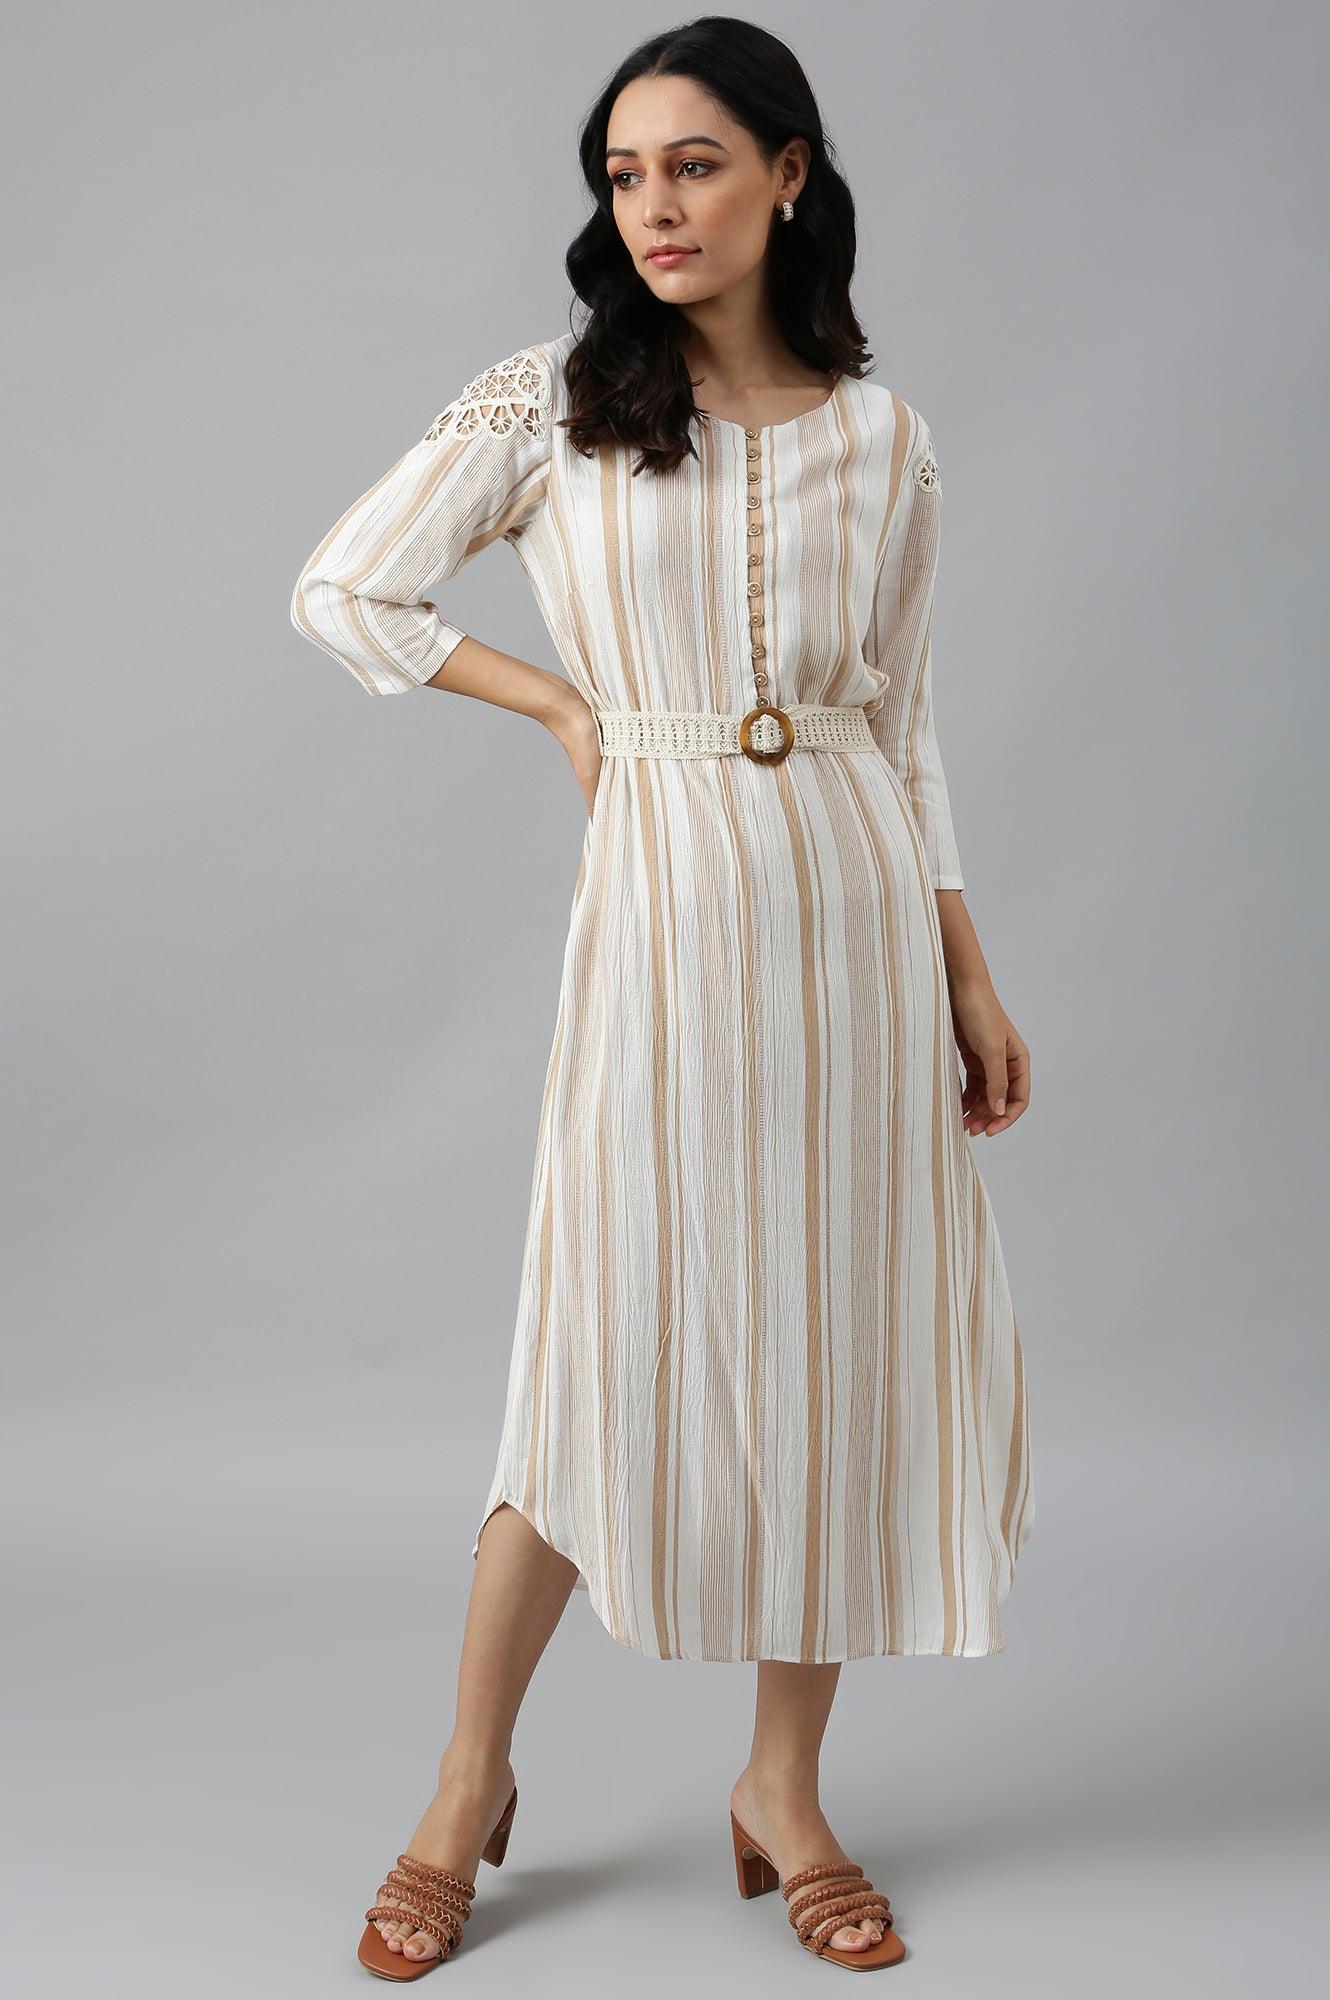 Ecru And Brown Stripe Print Dress With Crochet Belt - wforwoman